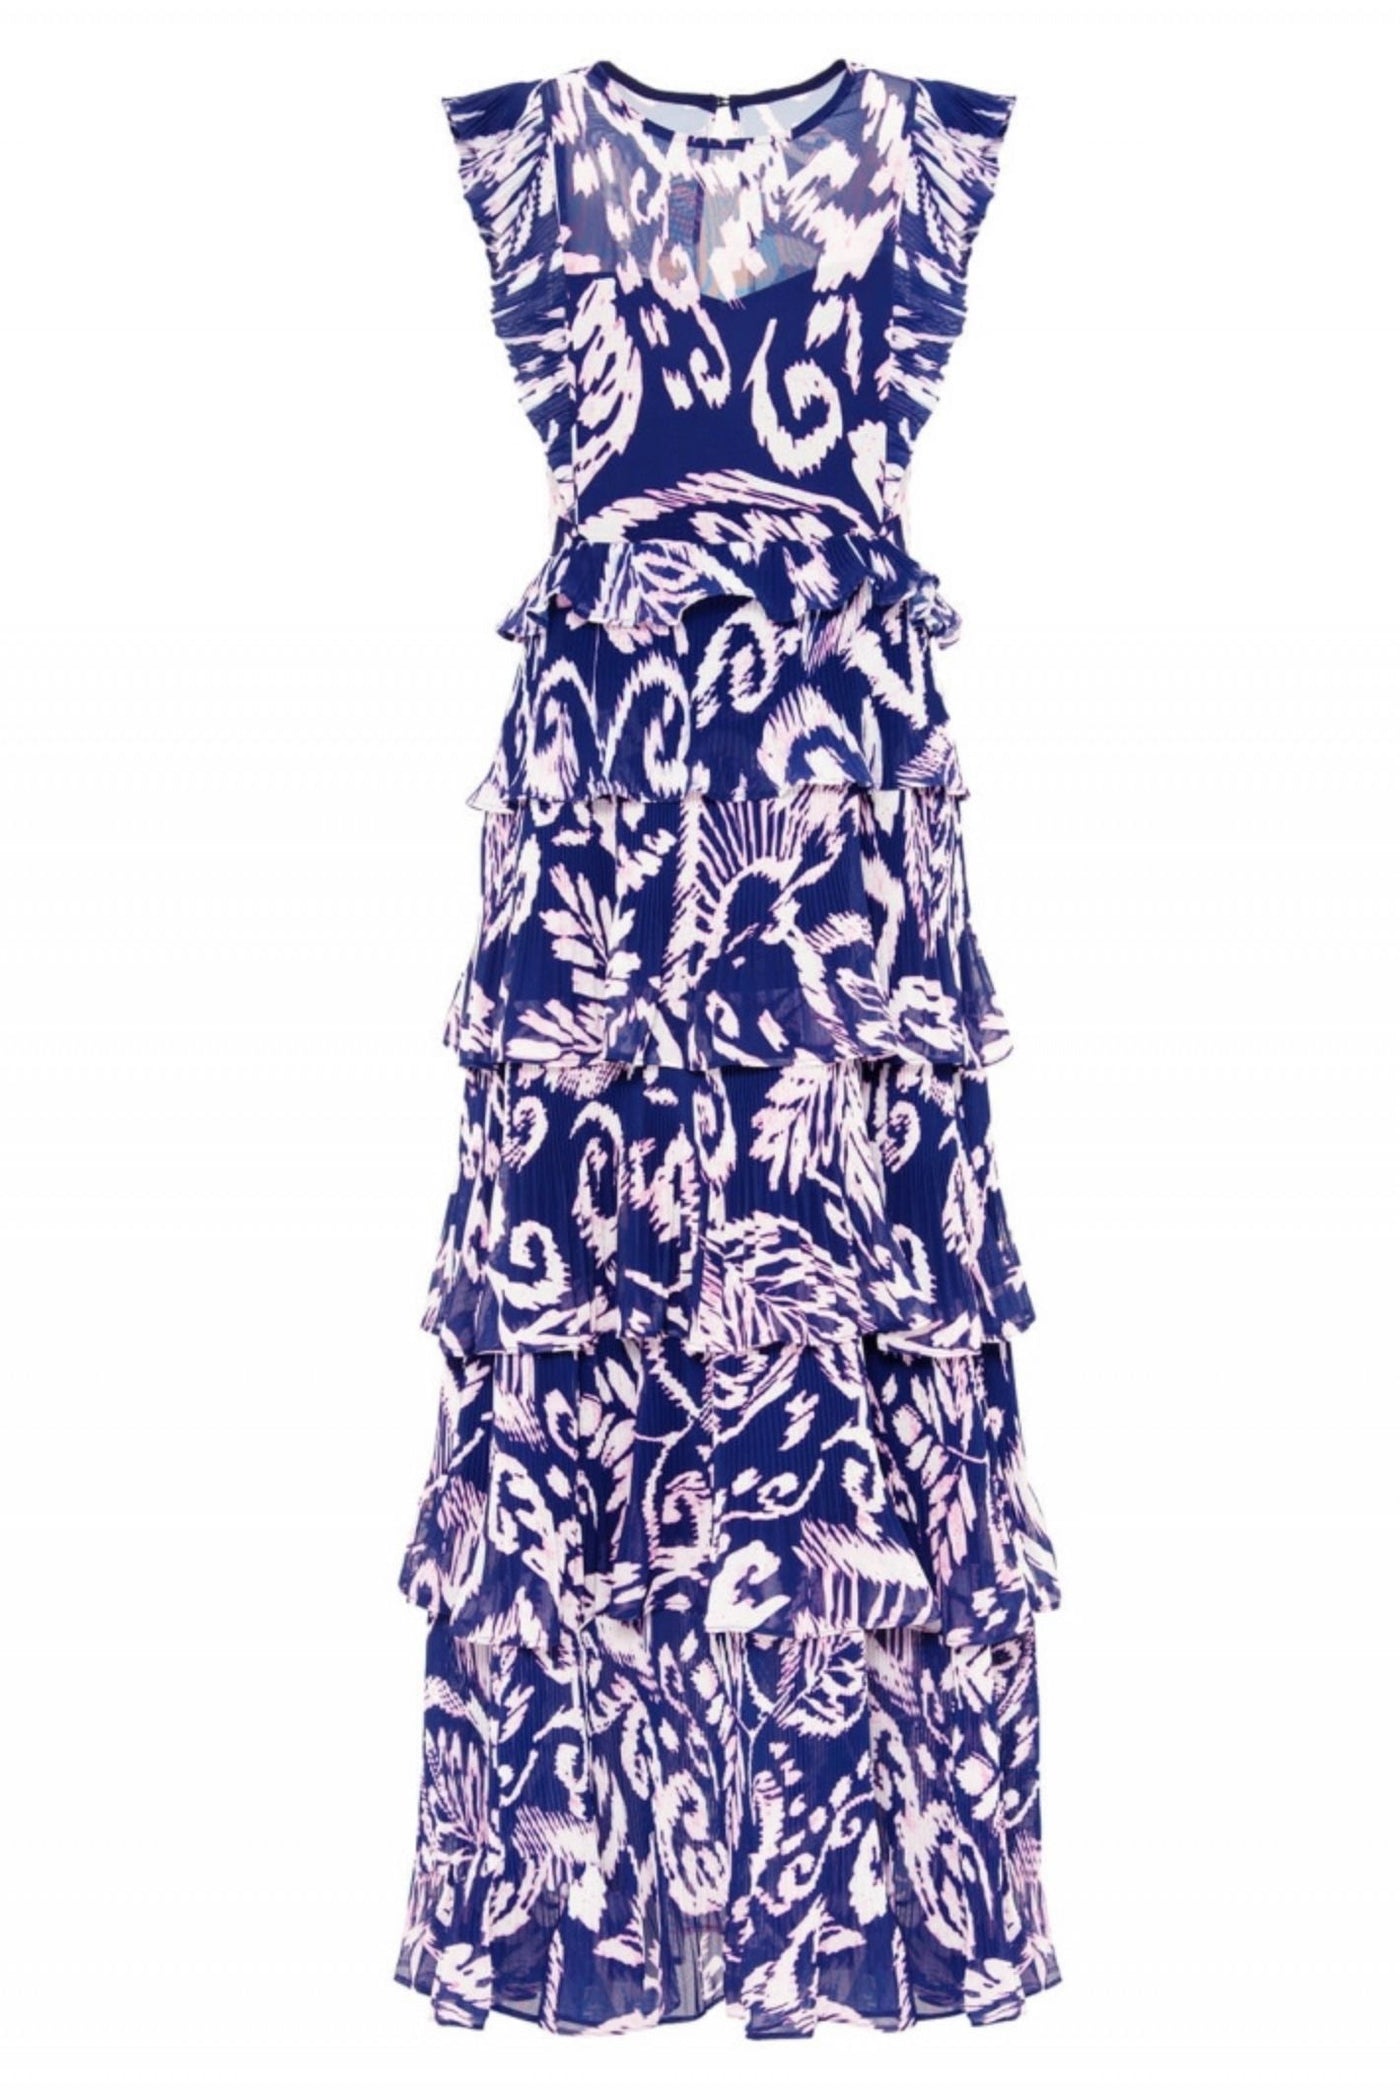 Beatrice B Indigo Moire Couture Dress Blue